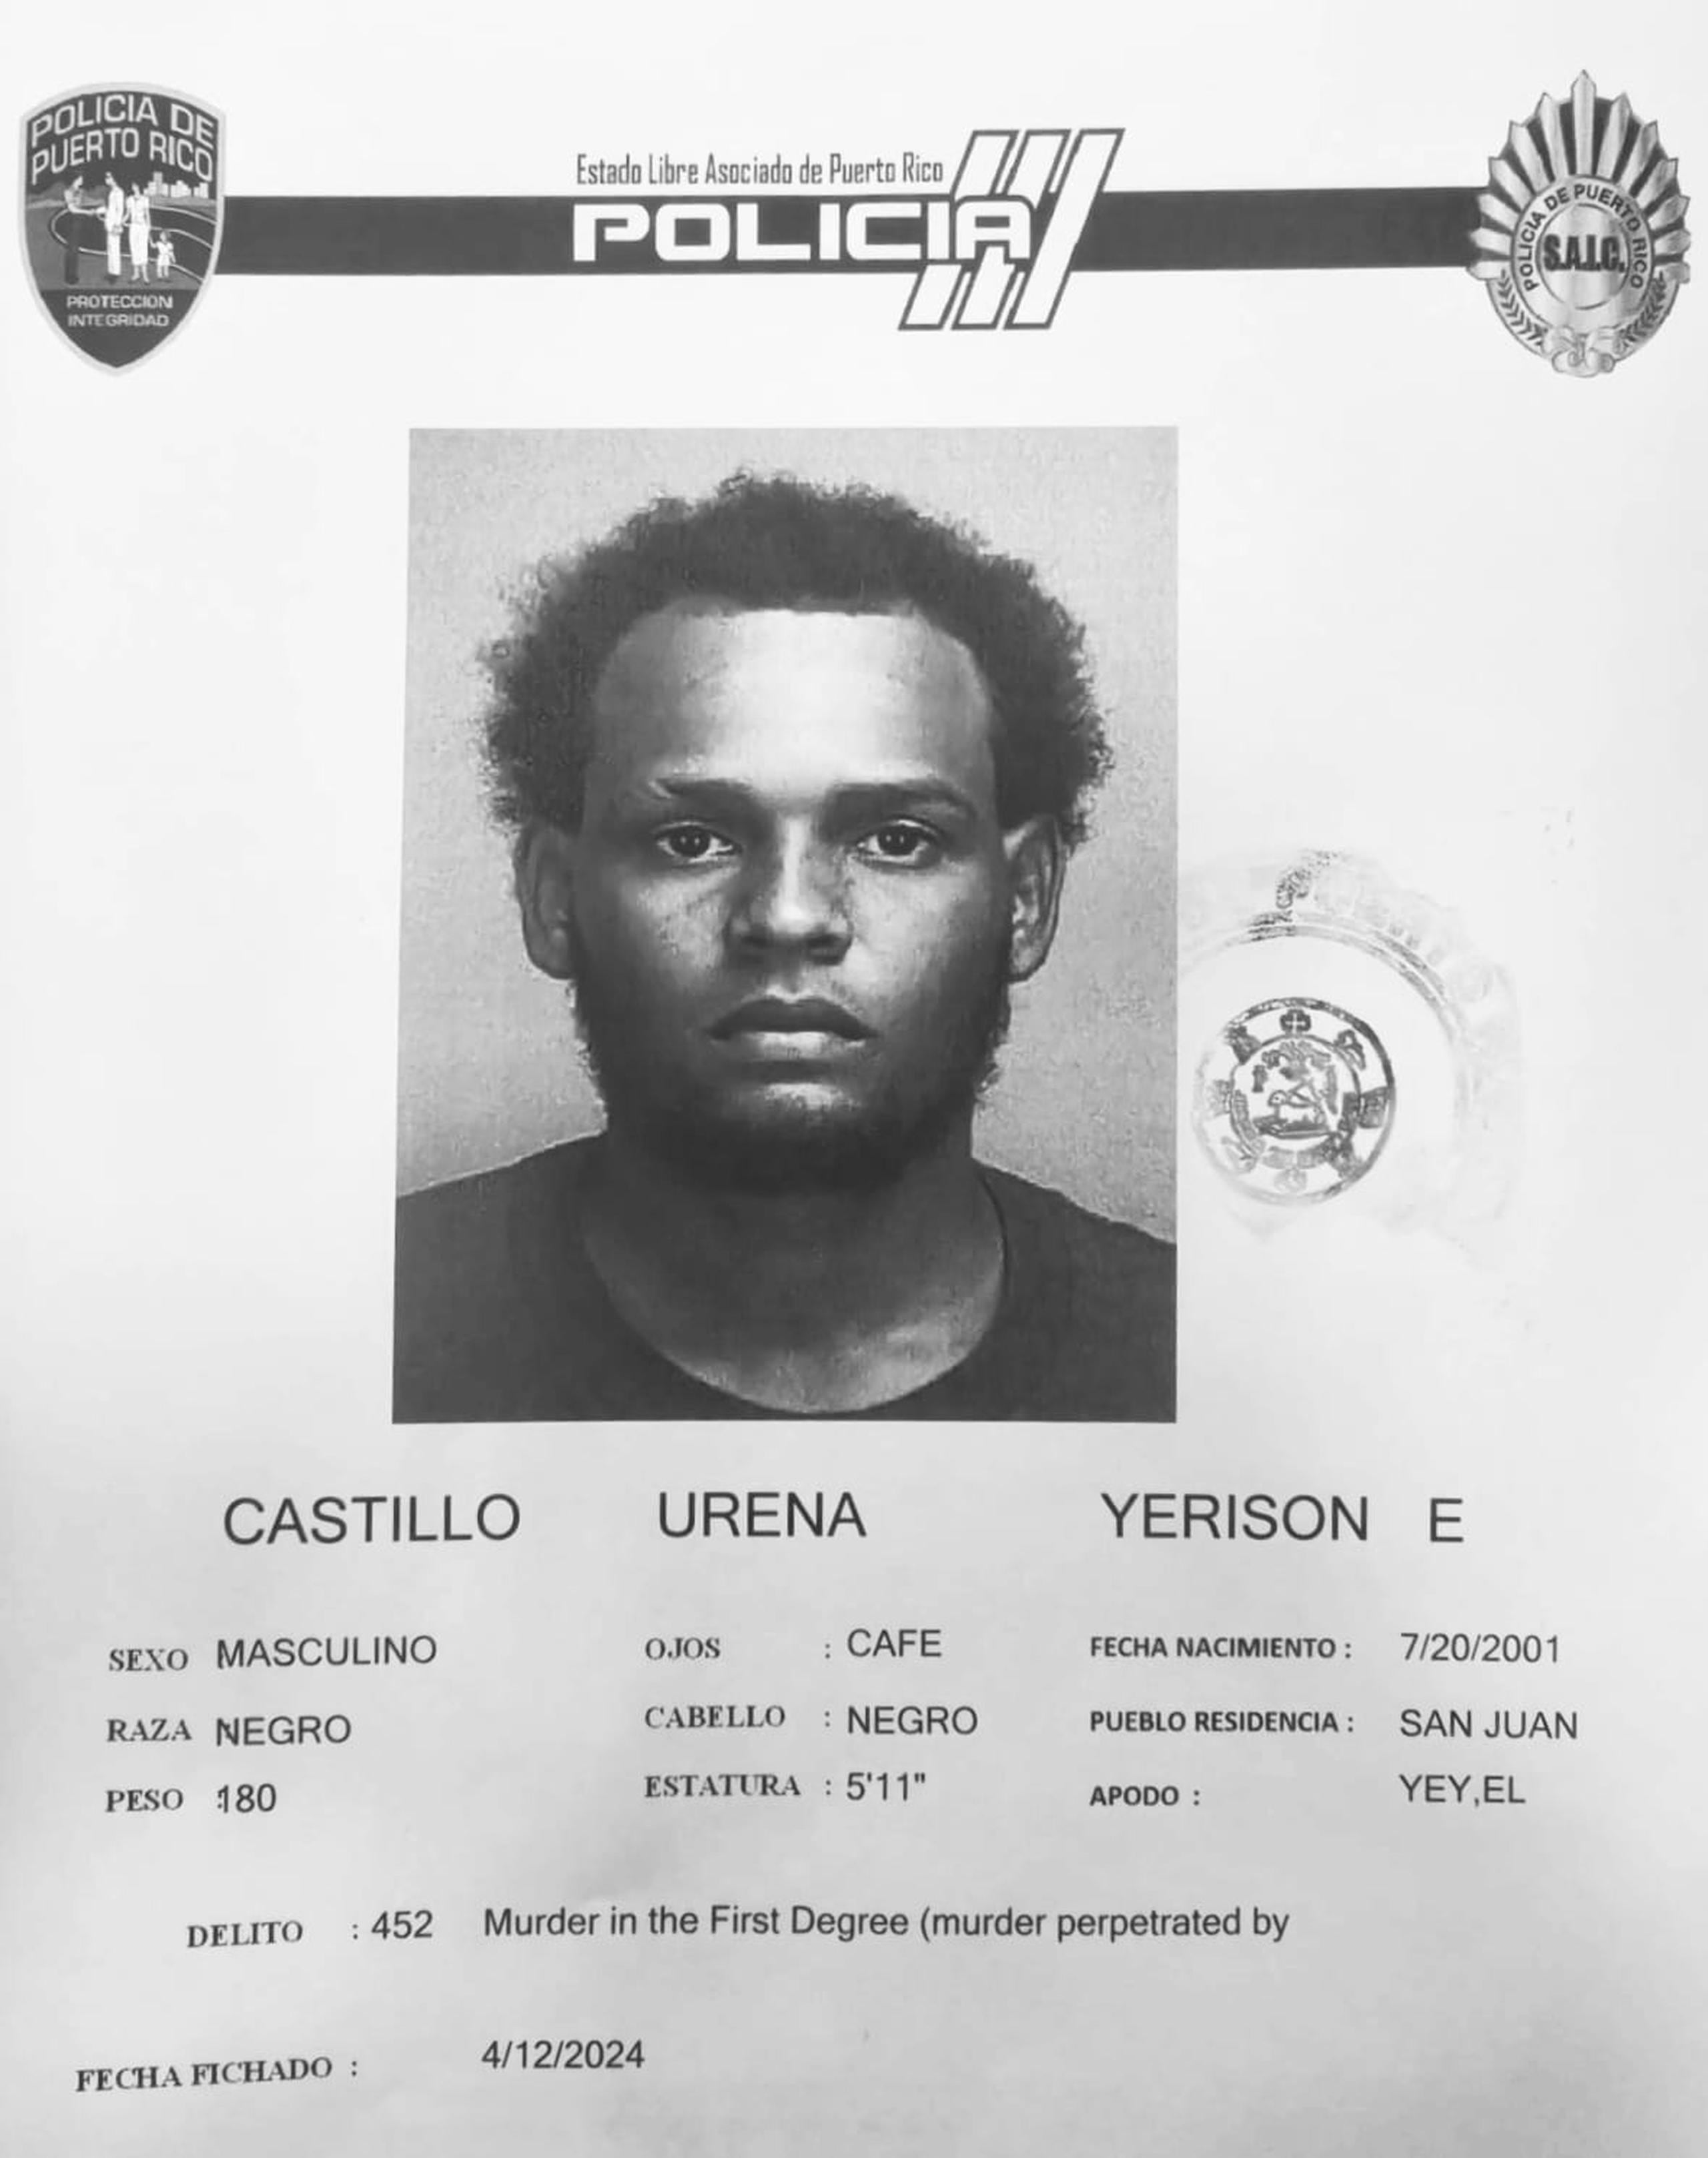 Yerson E. Castillo Ureña enfrenta cargos por asesinato y violación a la Ley de Armas.